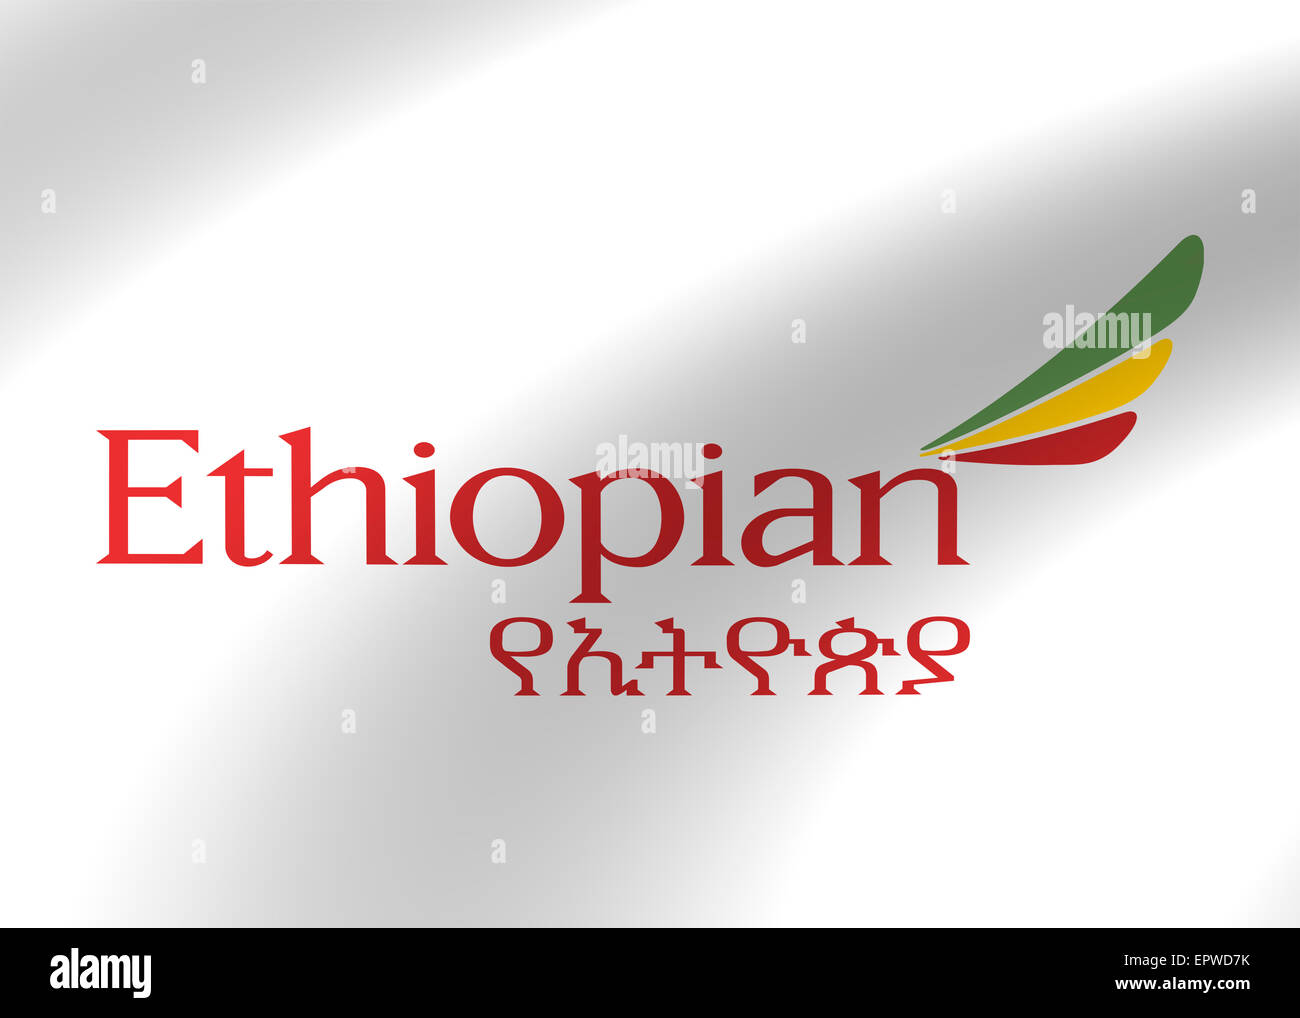 Ethiopian Airlines logo icon flag symbol emblem sign Stock Photo